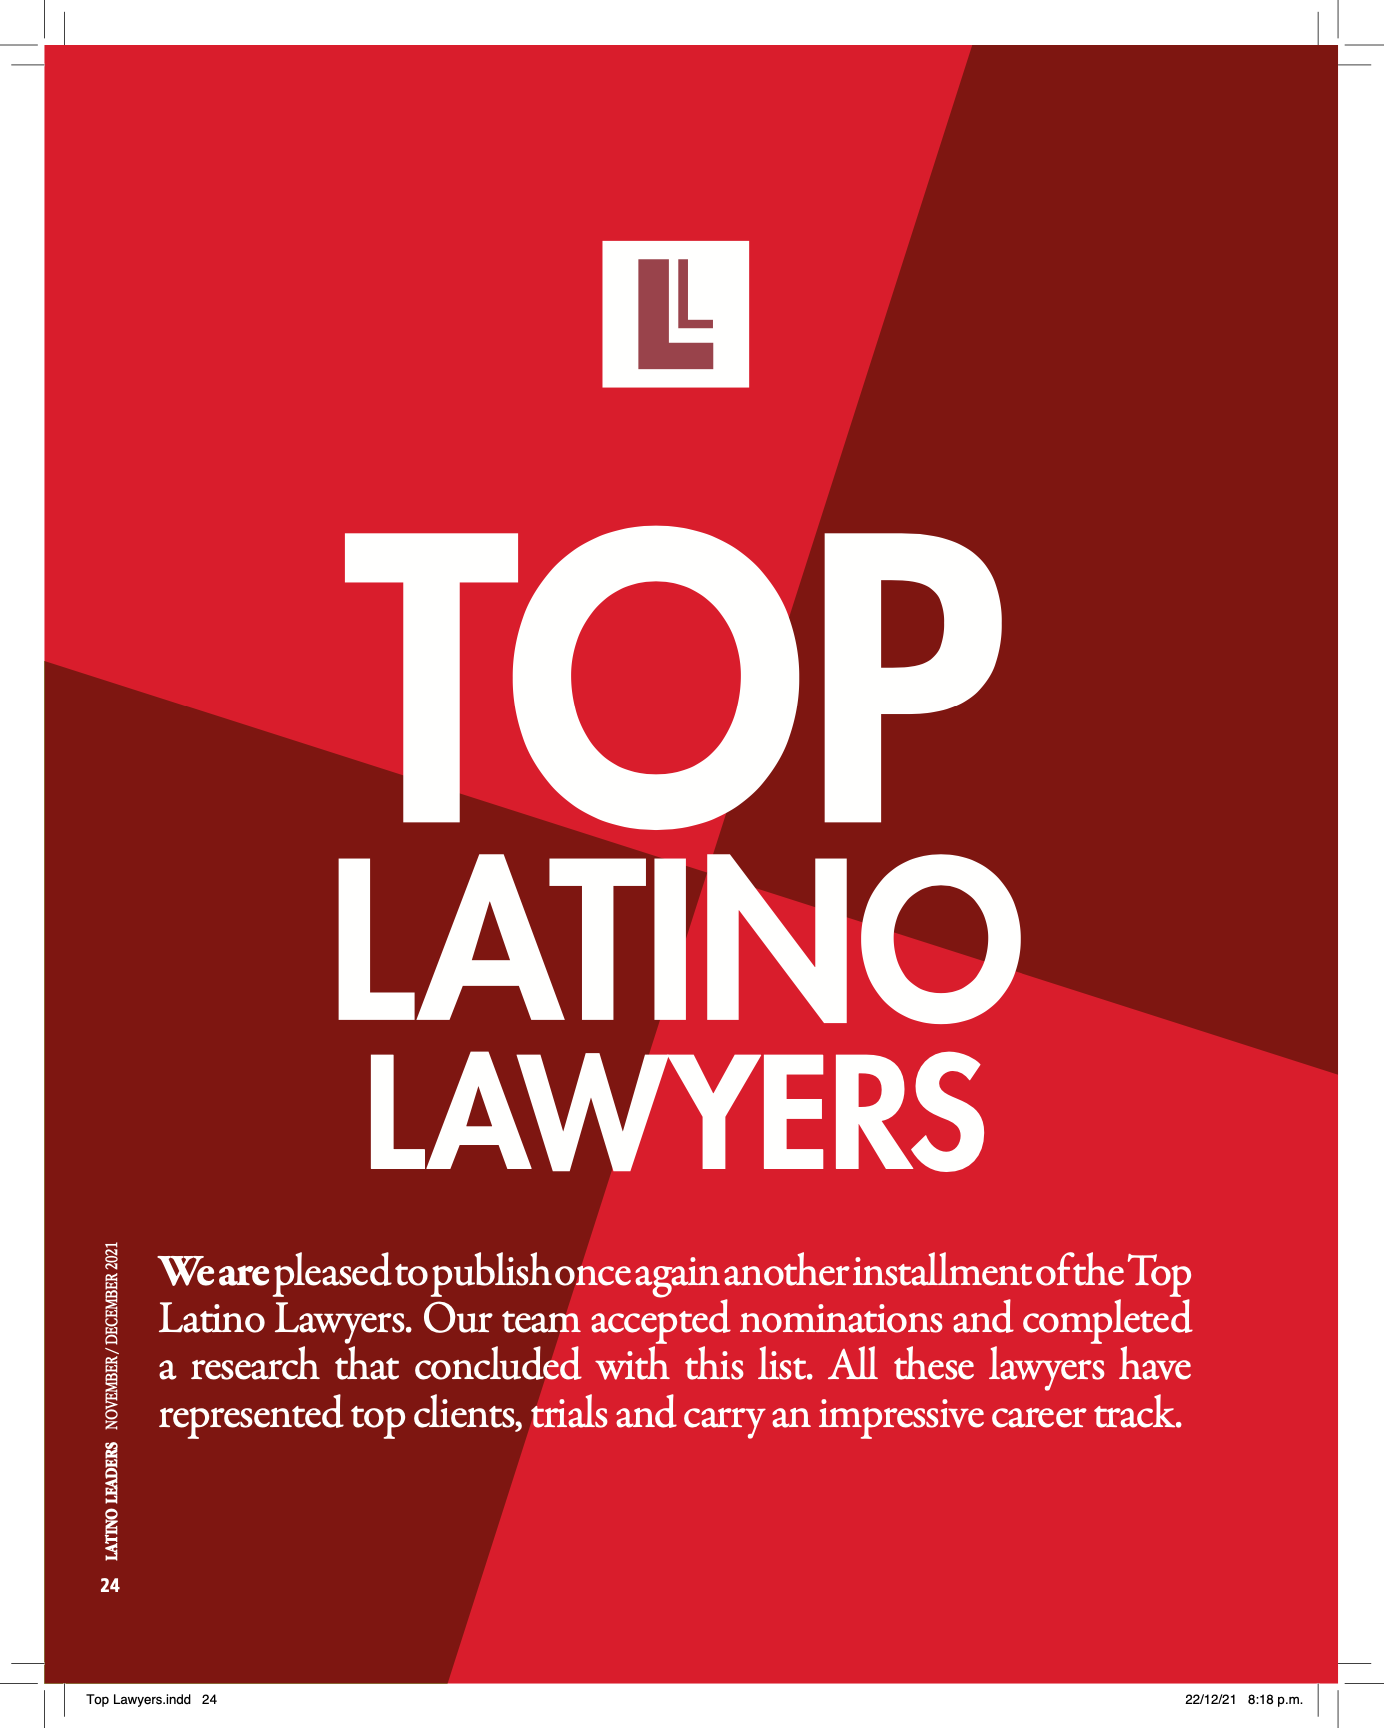 Top Latino Lawyers — Latino Leaders